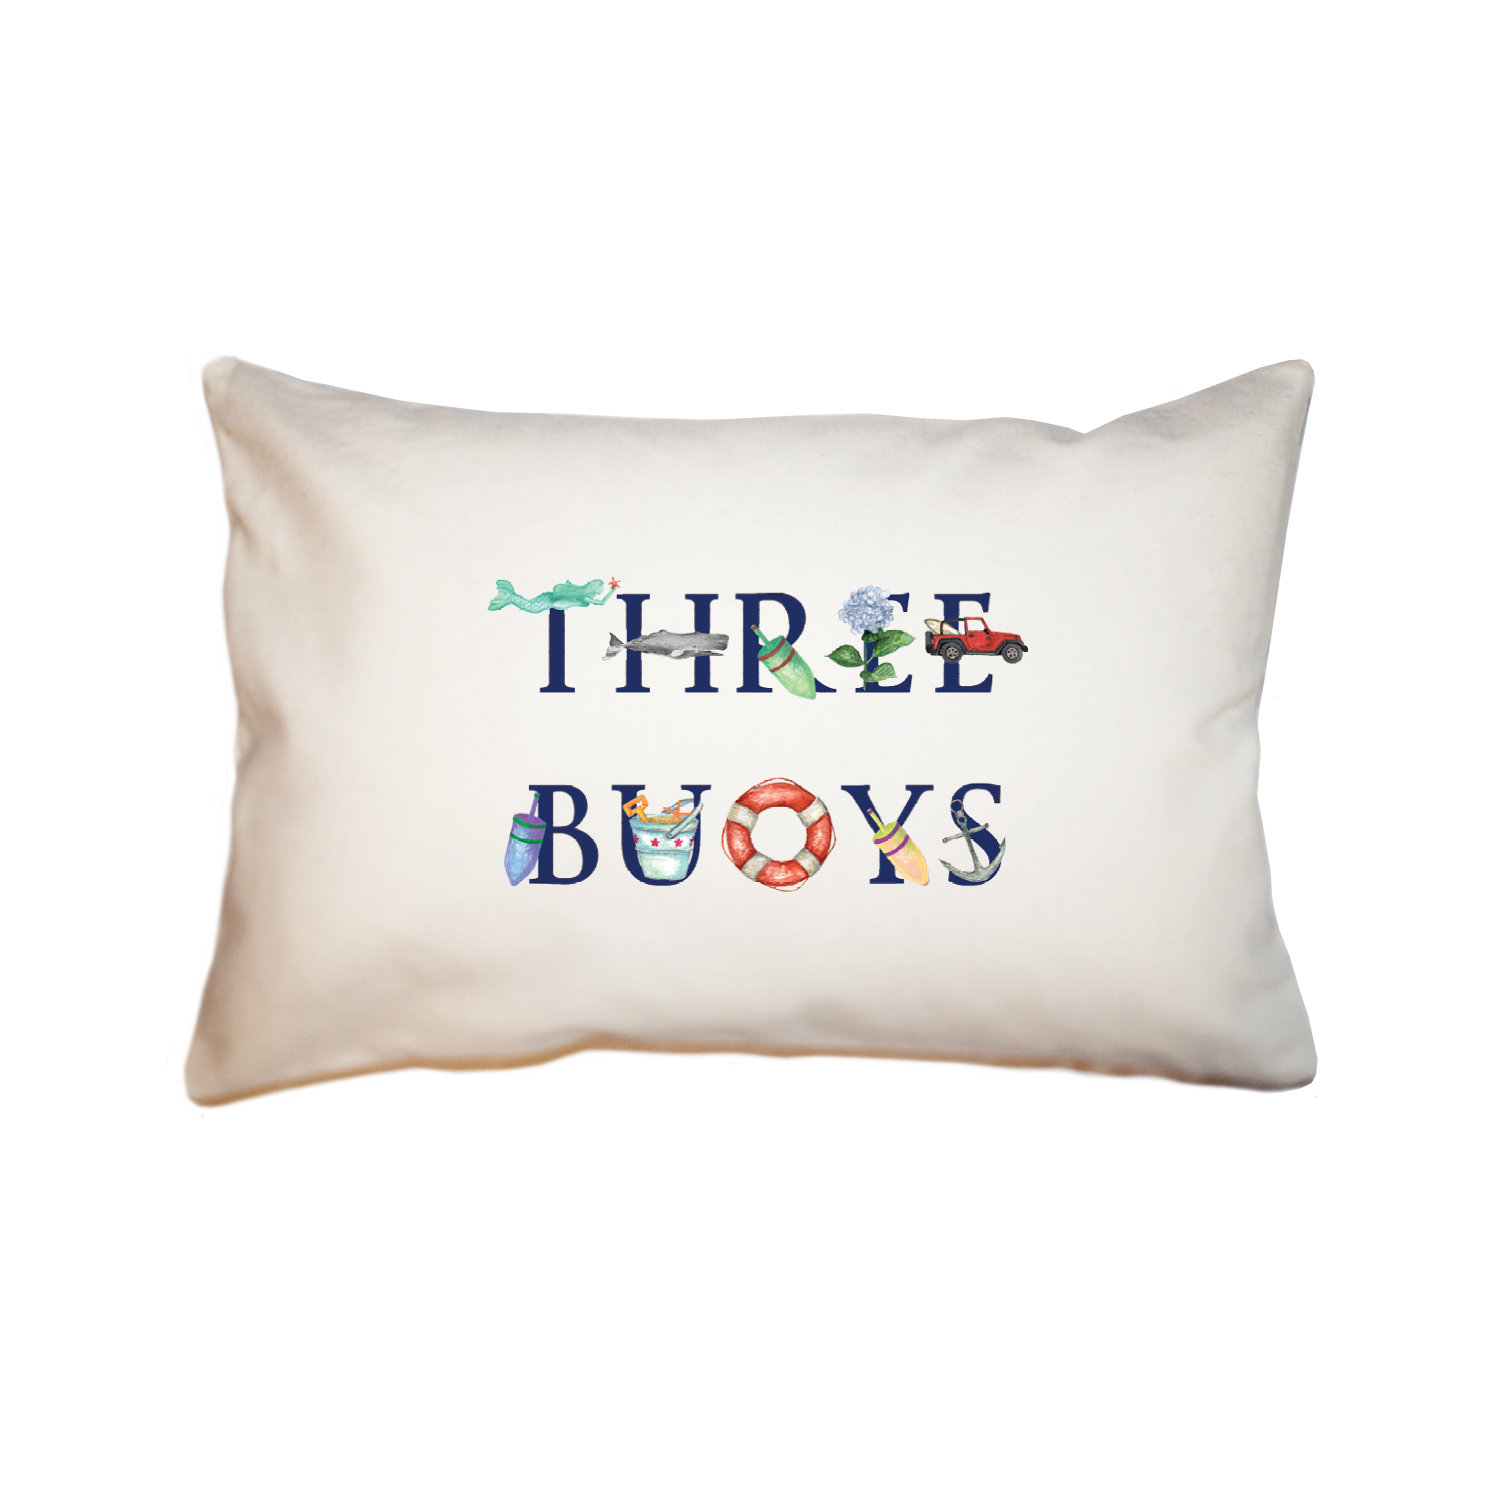 Three buoys large rectangle pillow